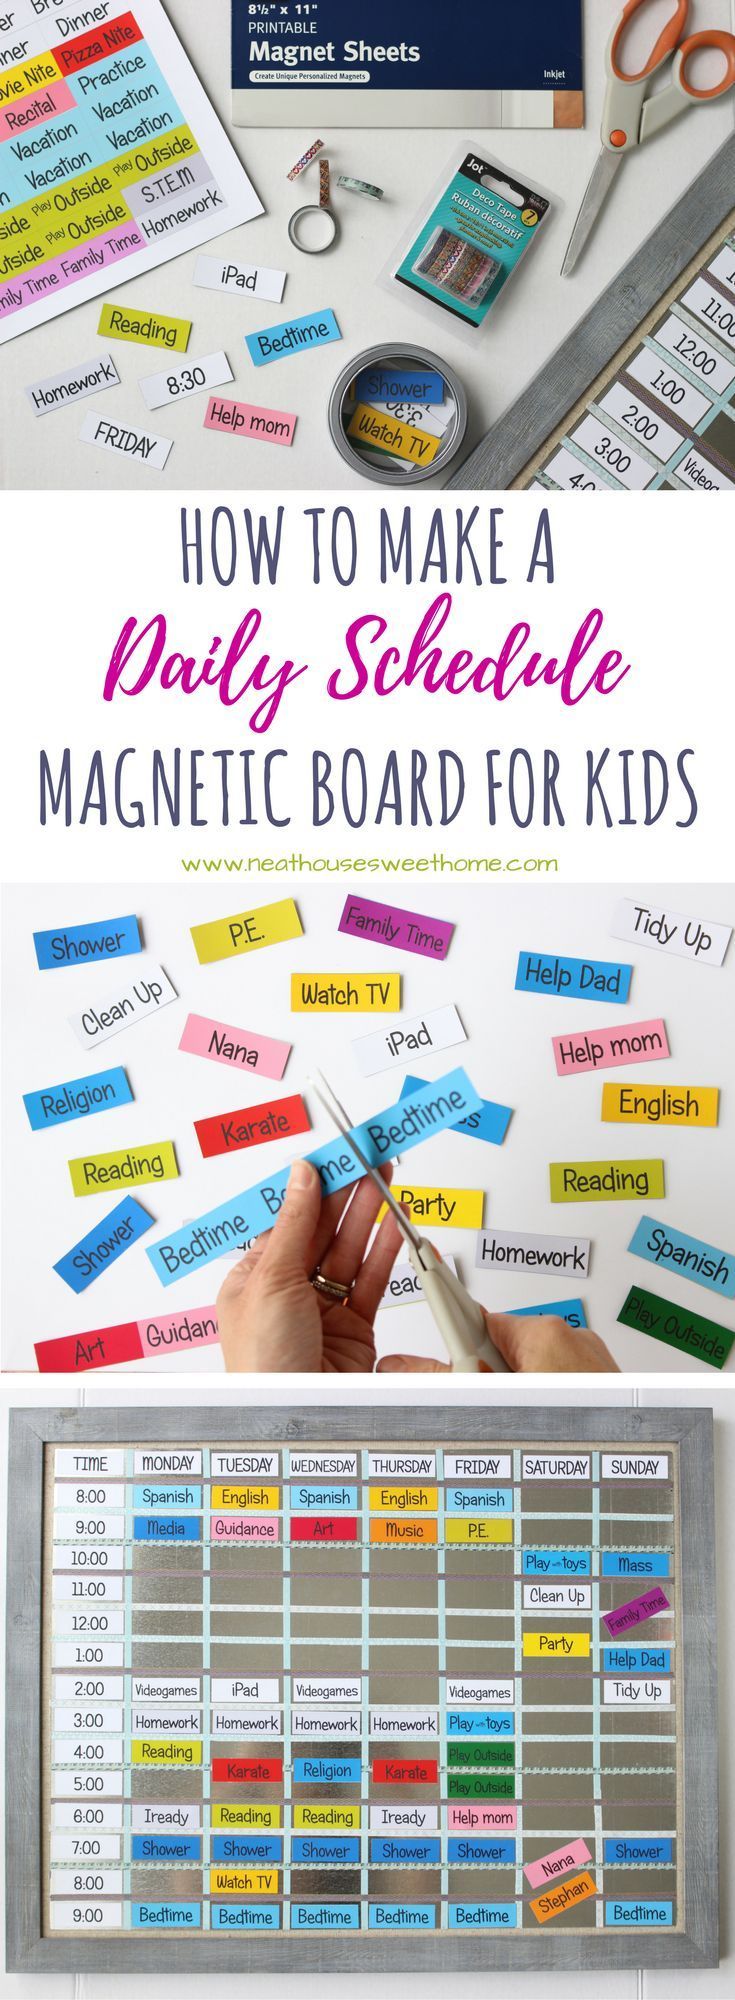 DIY Magnetic Board Schedule for Kids - Full Tutorial -   19 diy Organization for kids ideas